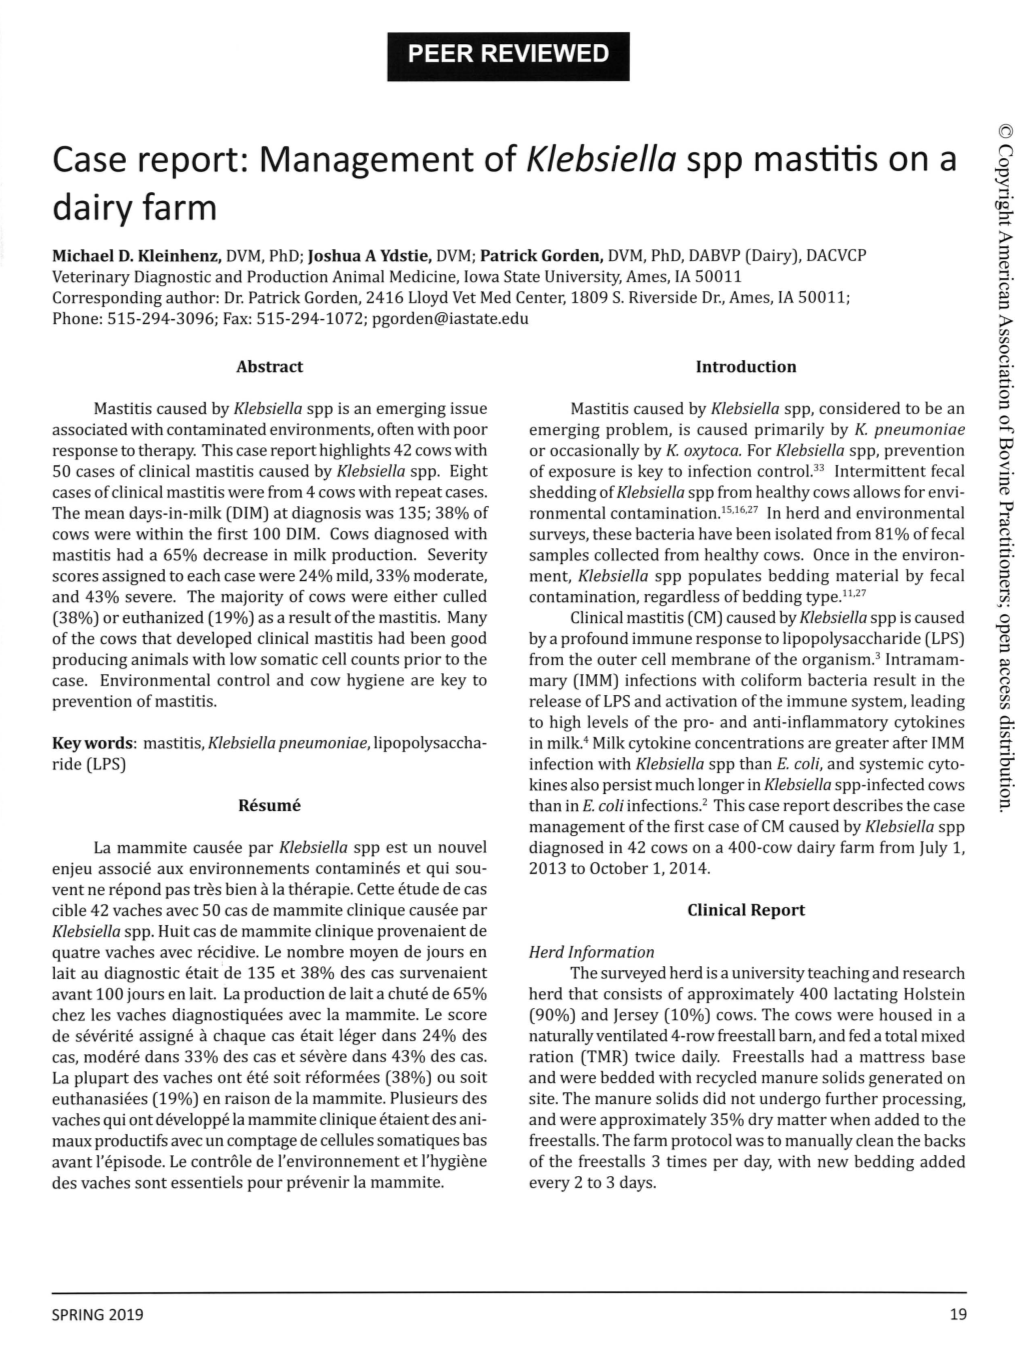 Case Report: Management of Klebsiella Spp Mastitis on a Dairy Farm